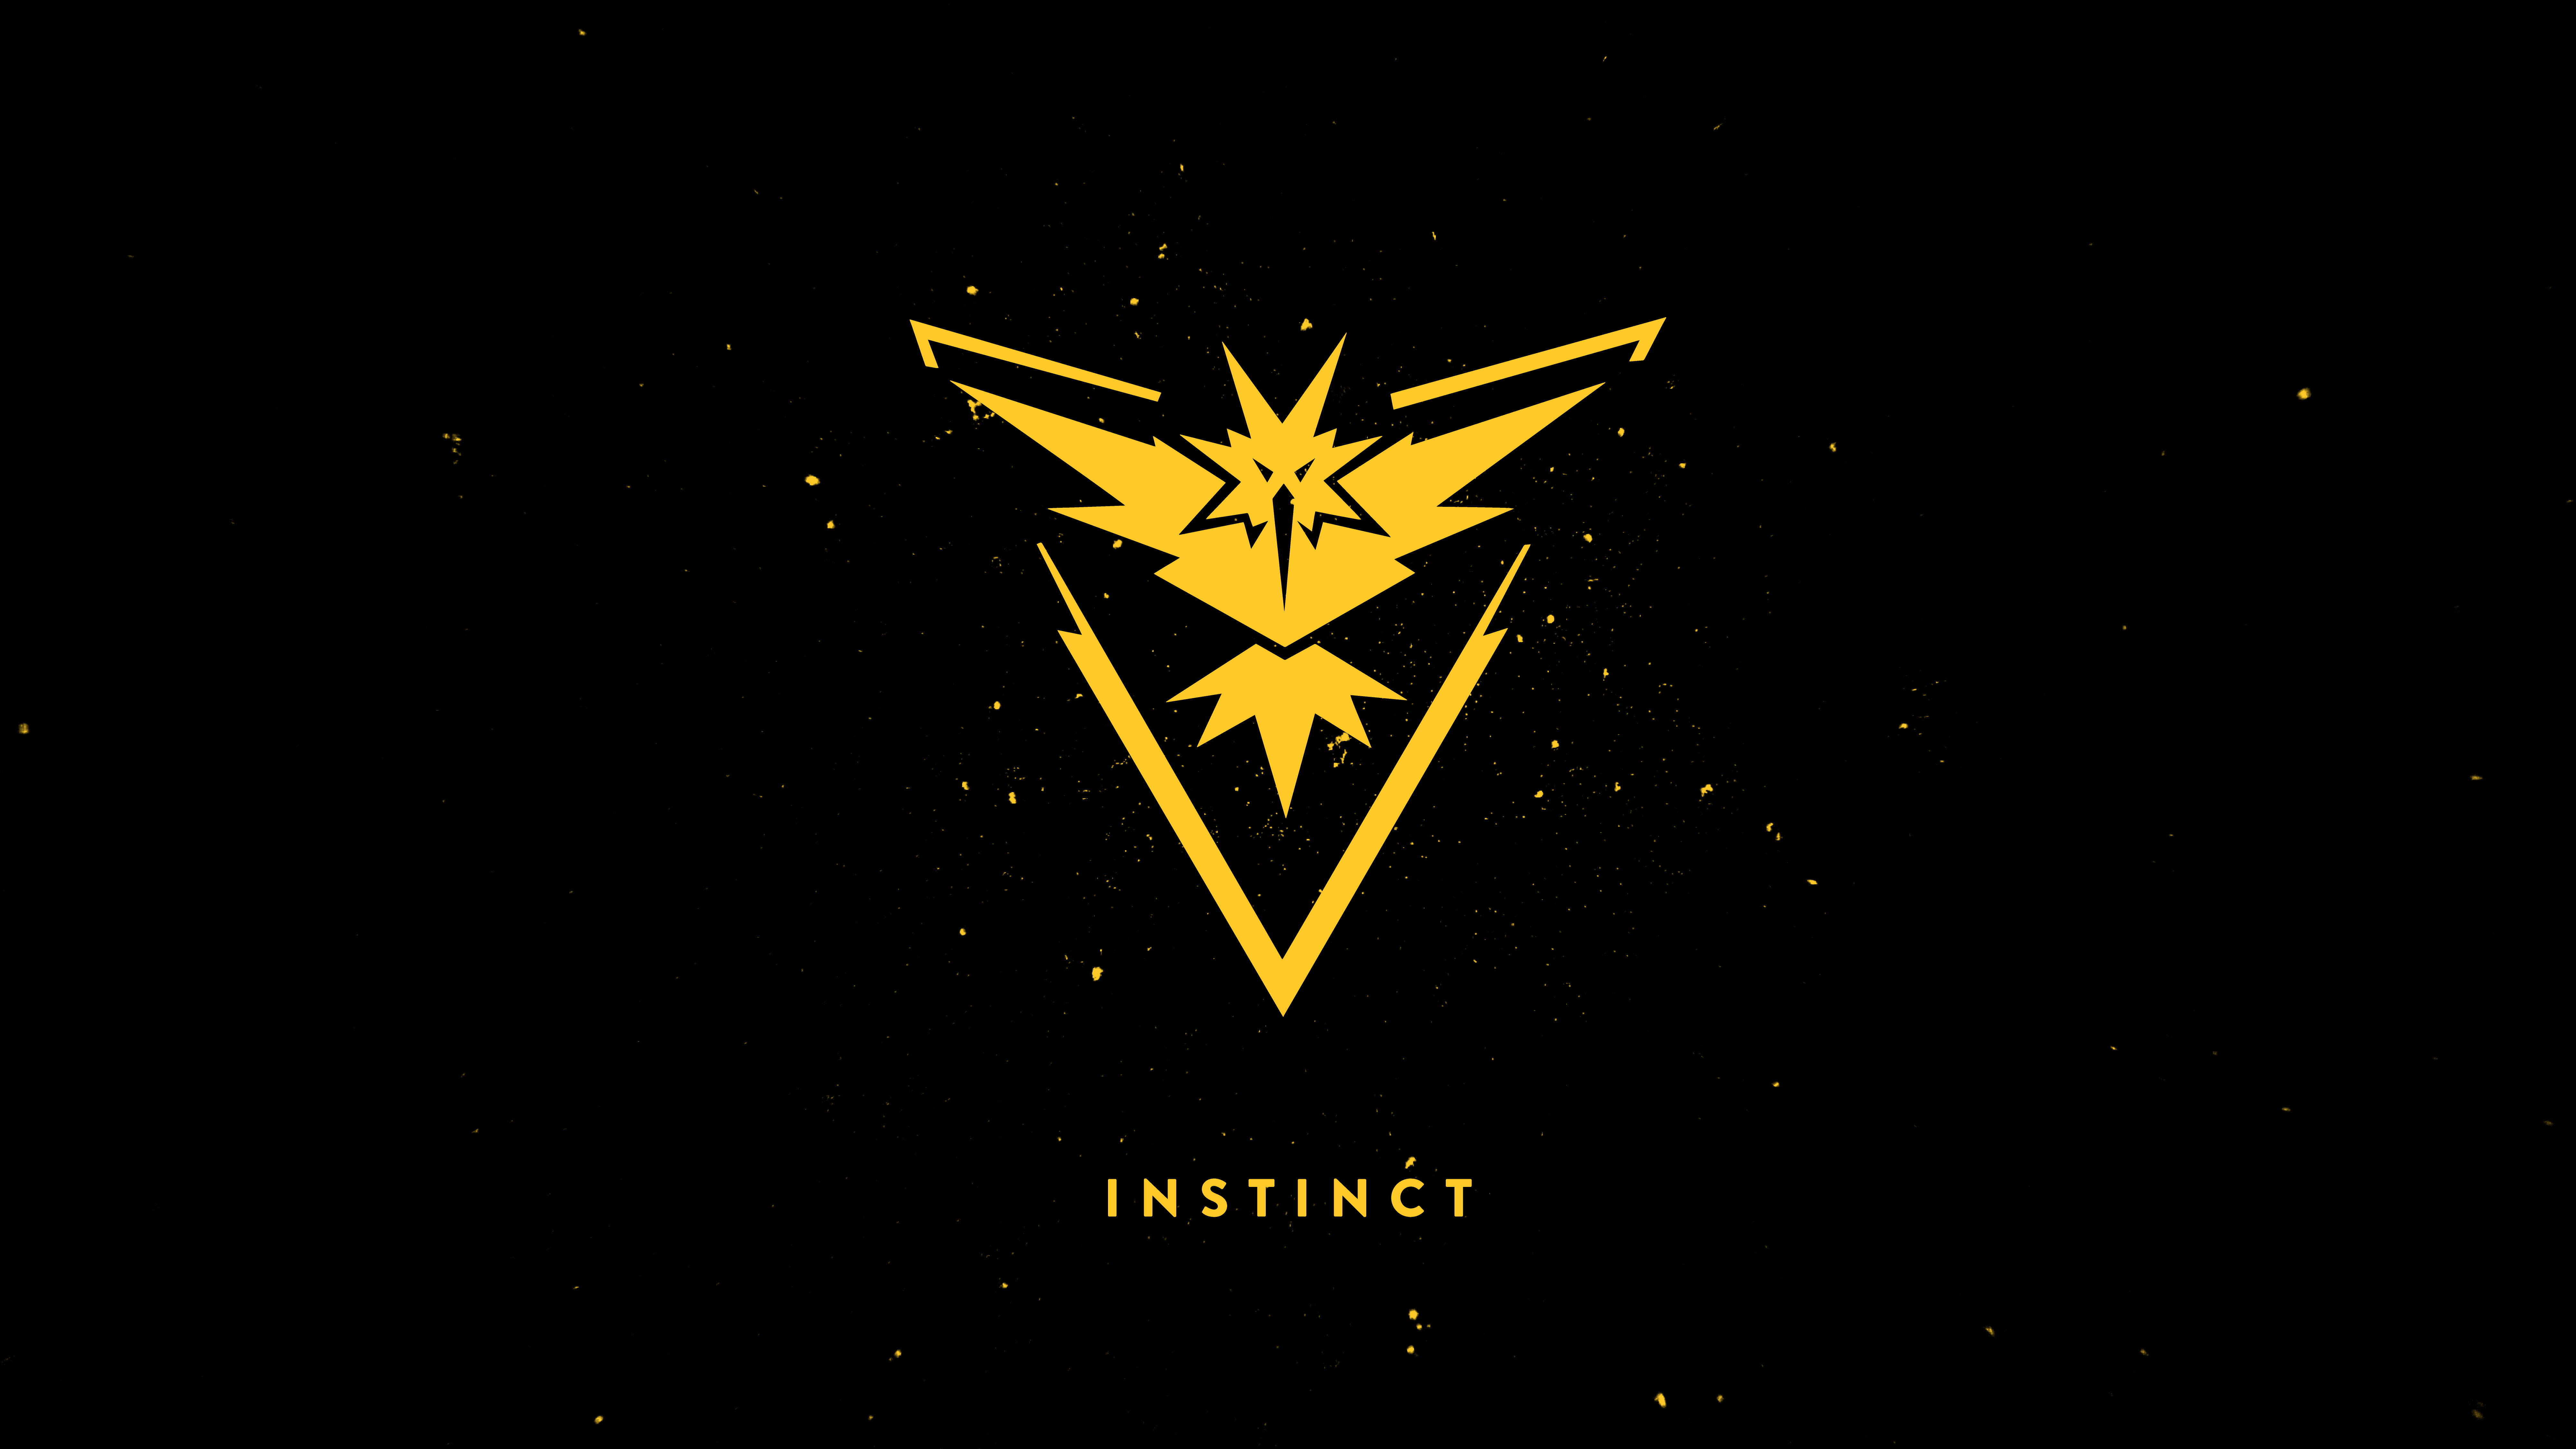 team instinct, pokemon go, games, 8k, night, star shape, yellow